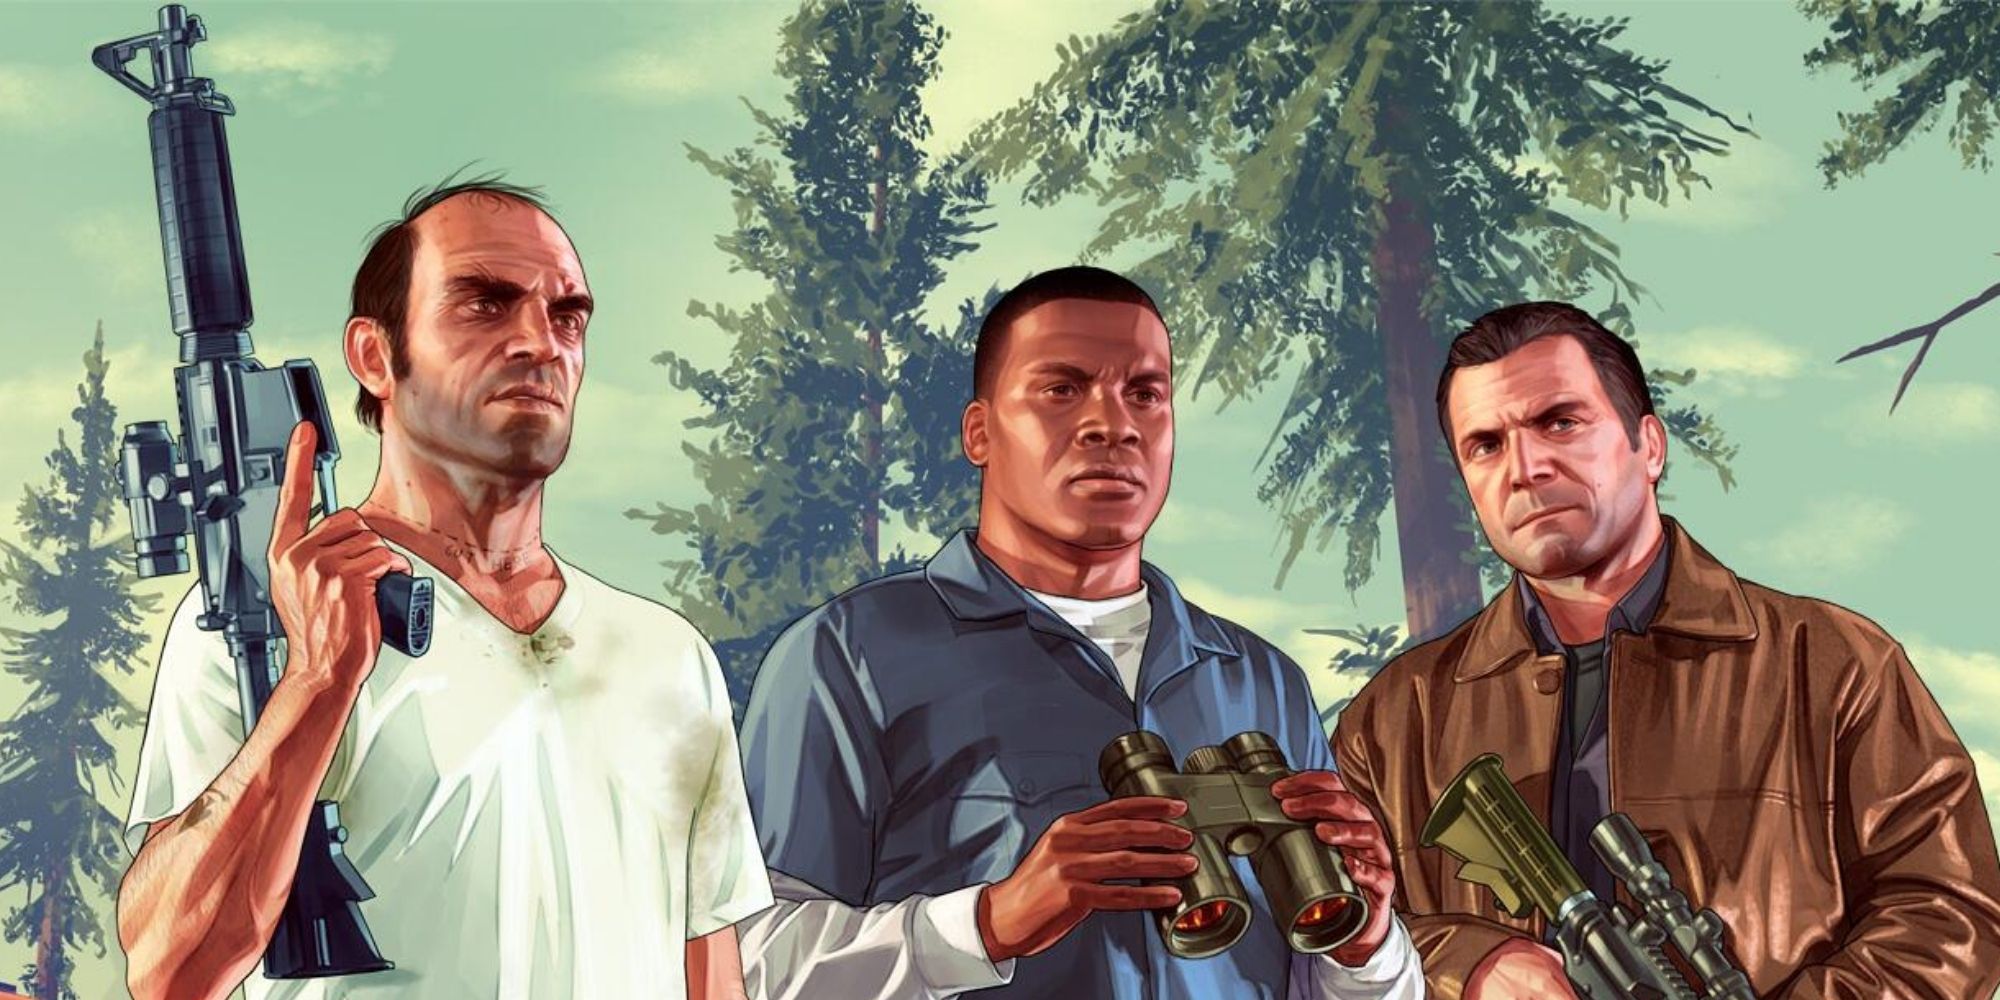 Rockstar Employees Devastated by GTA 6 Leak; Gamers Much Less So